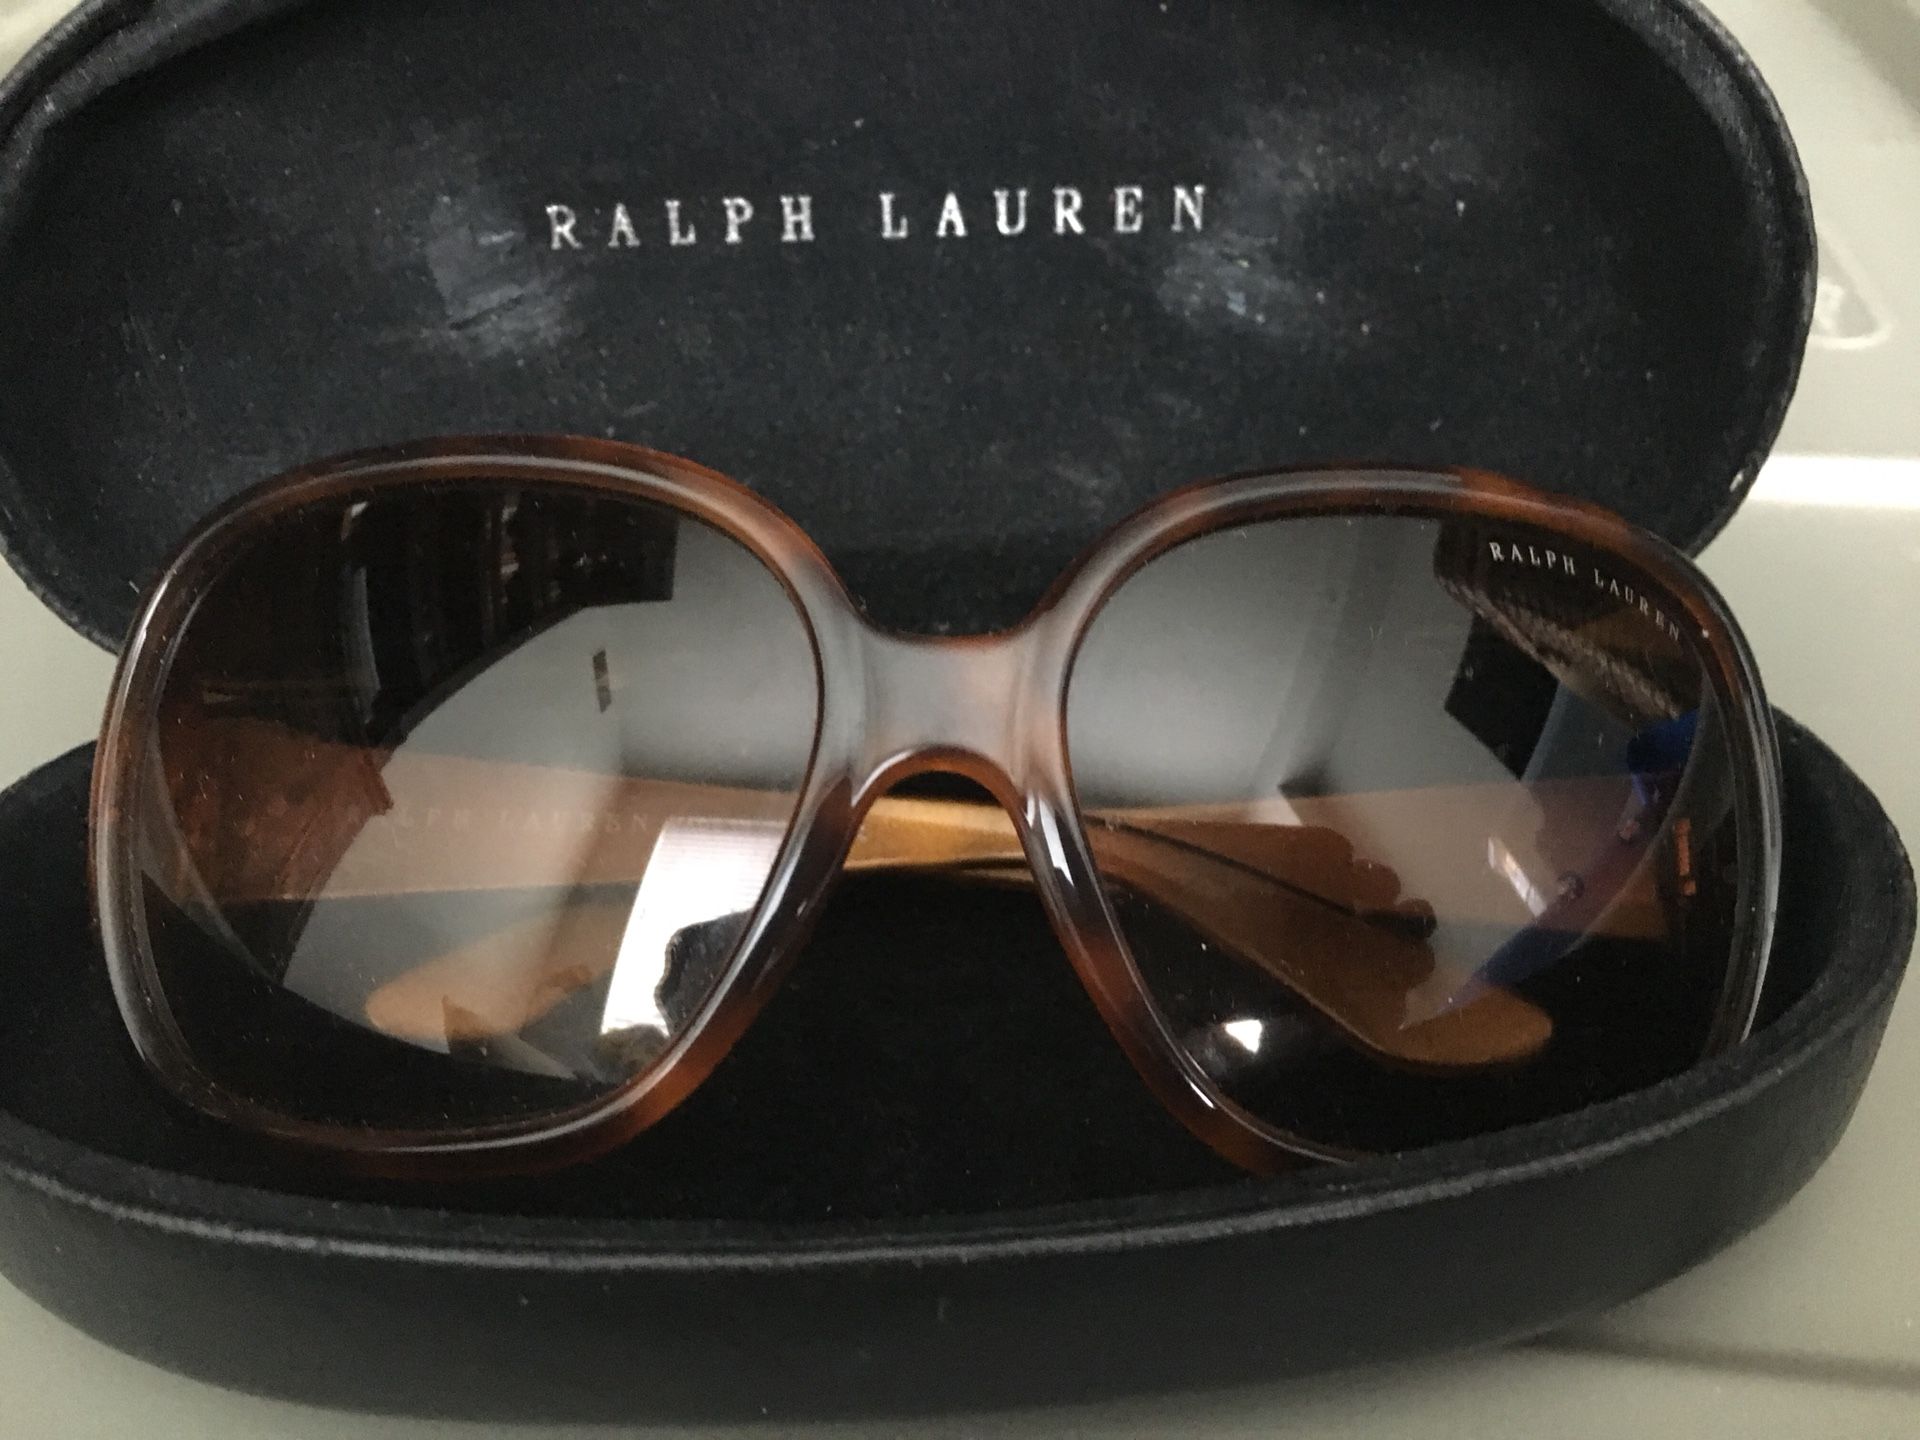 Ralph Lauren Sun Glasses with Case